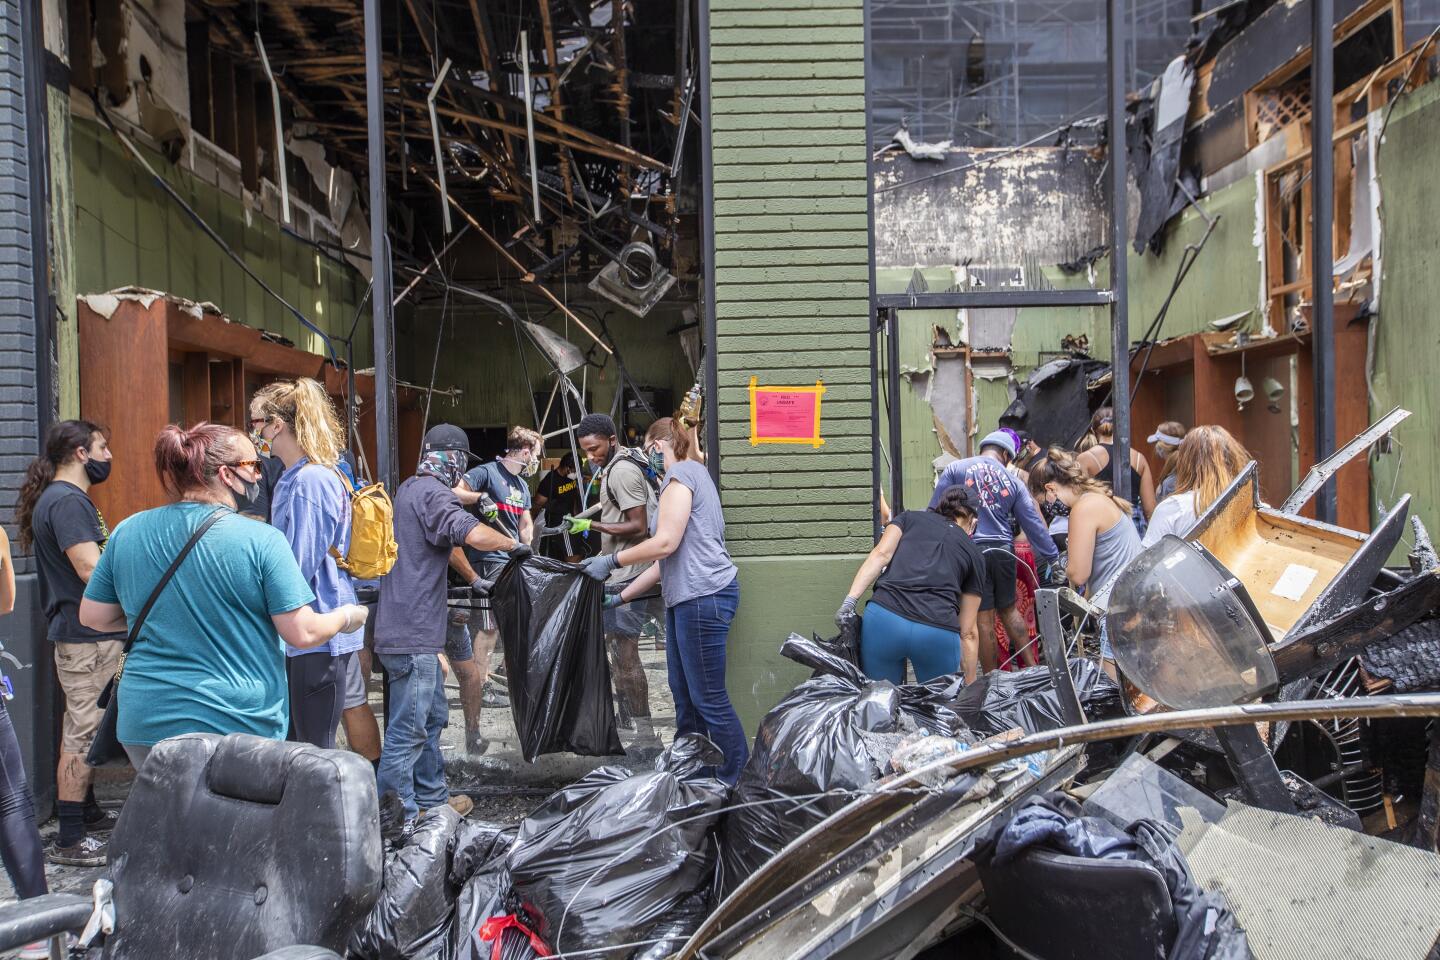 Volunteers help clean up a looted store in Long Beach.